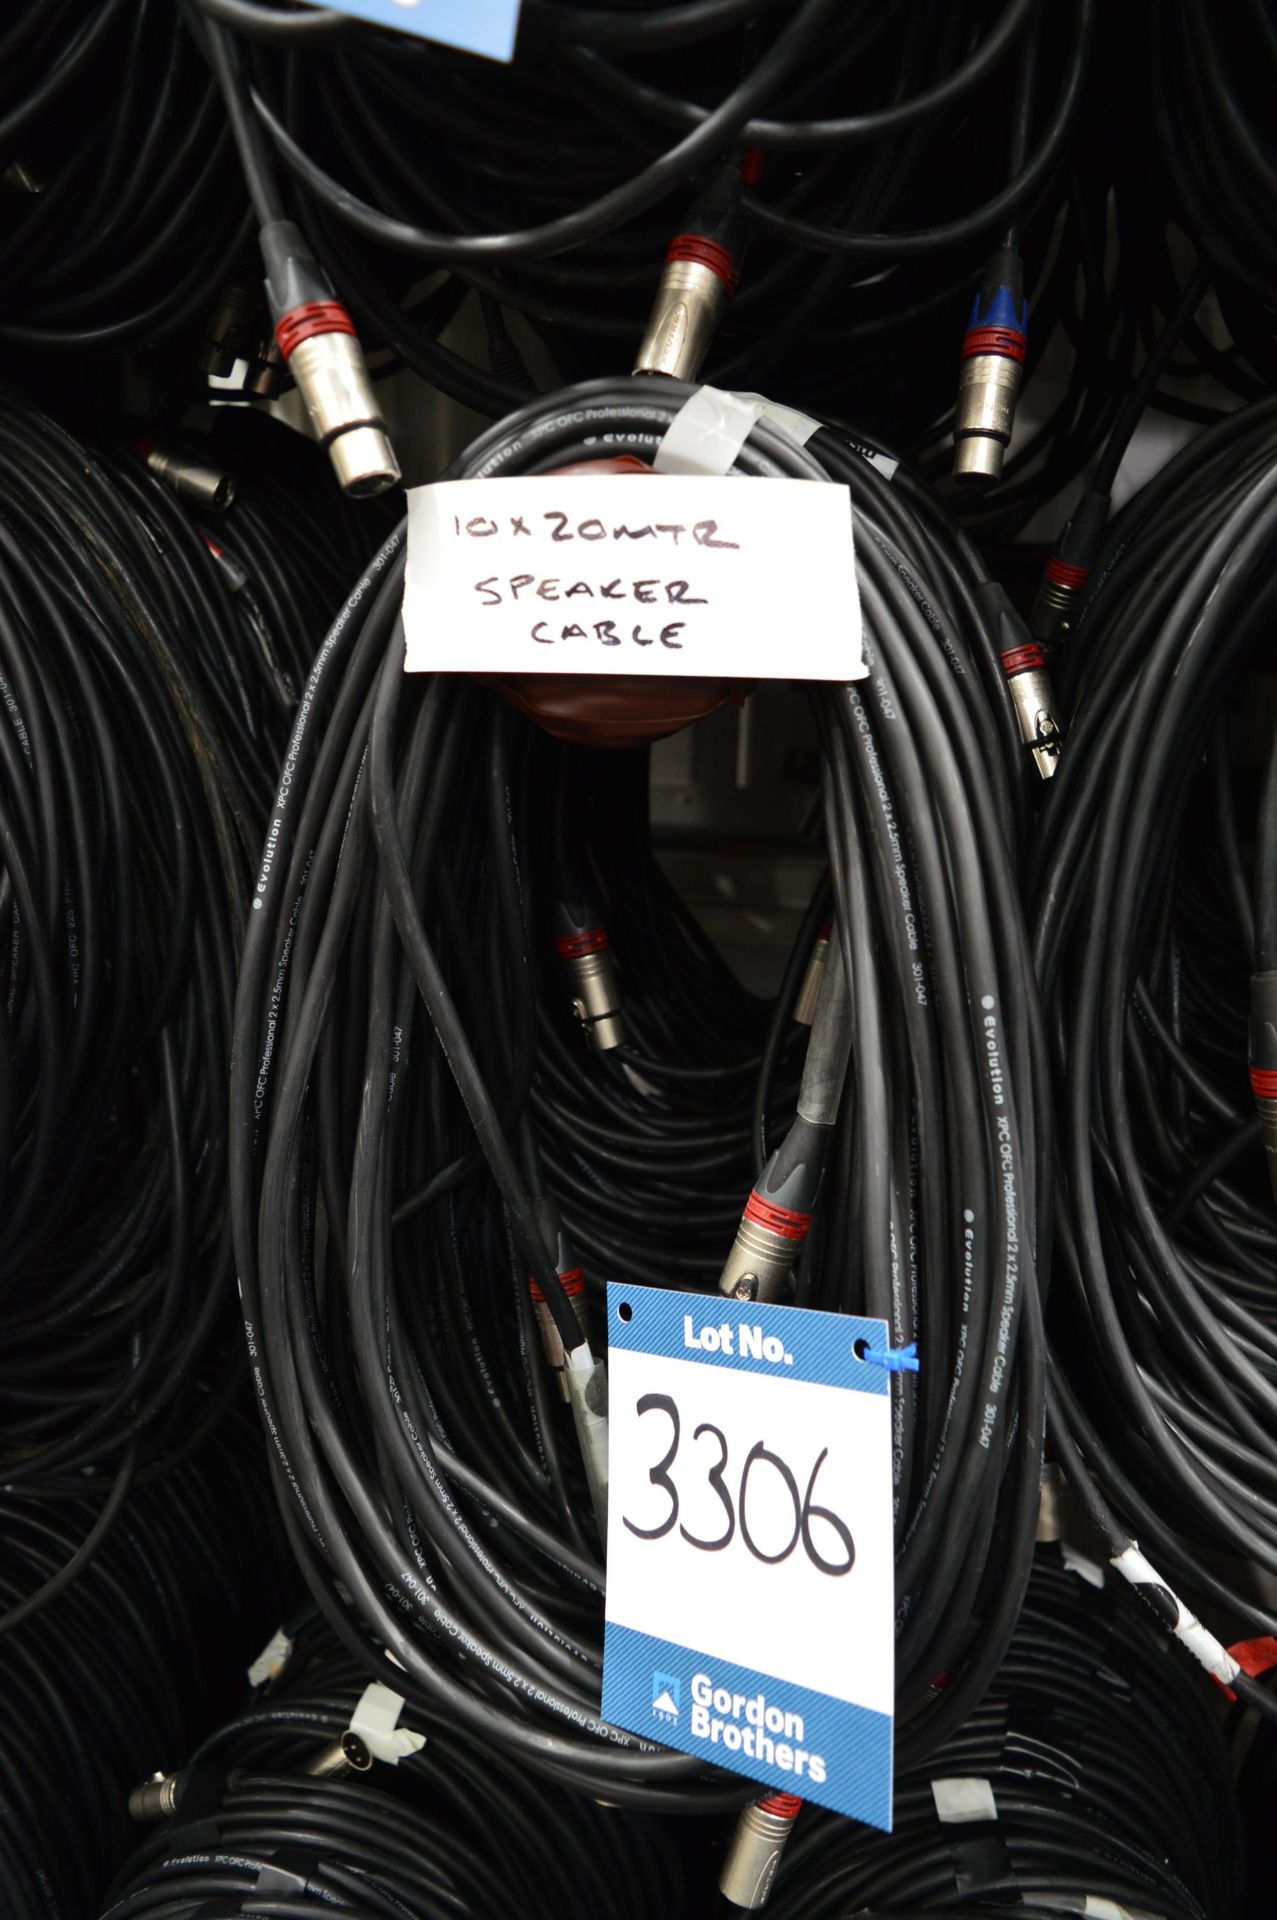 10x 20m speaker cables: Unit 500, Eckersall Road, Birmingham B38 8SE